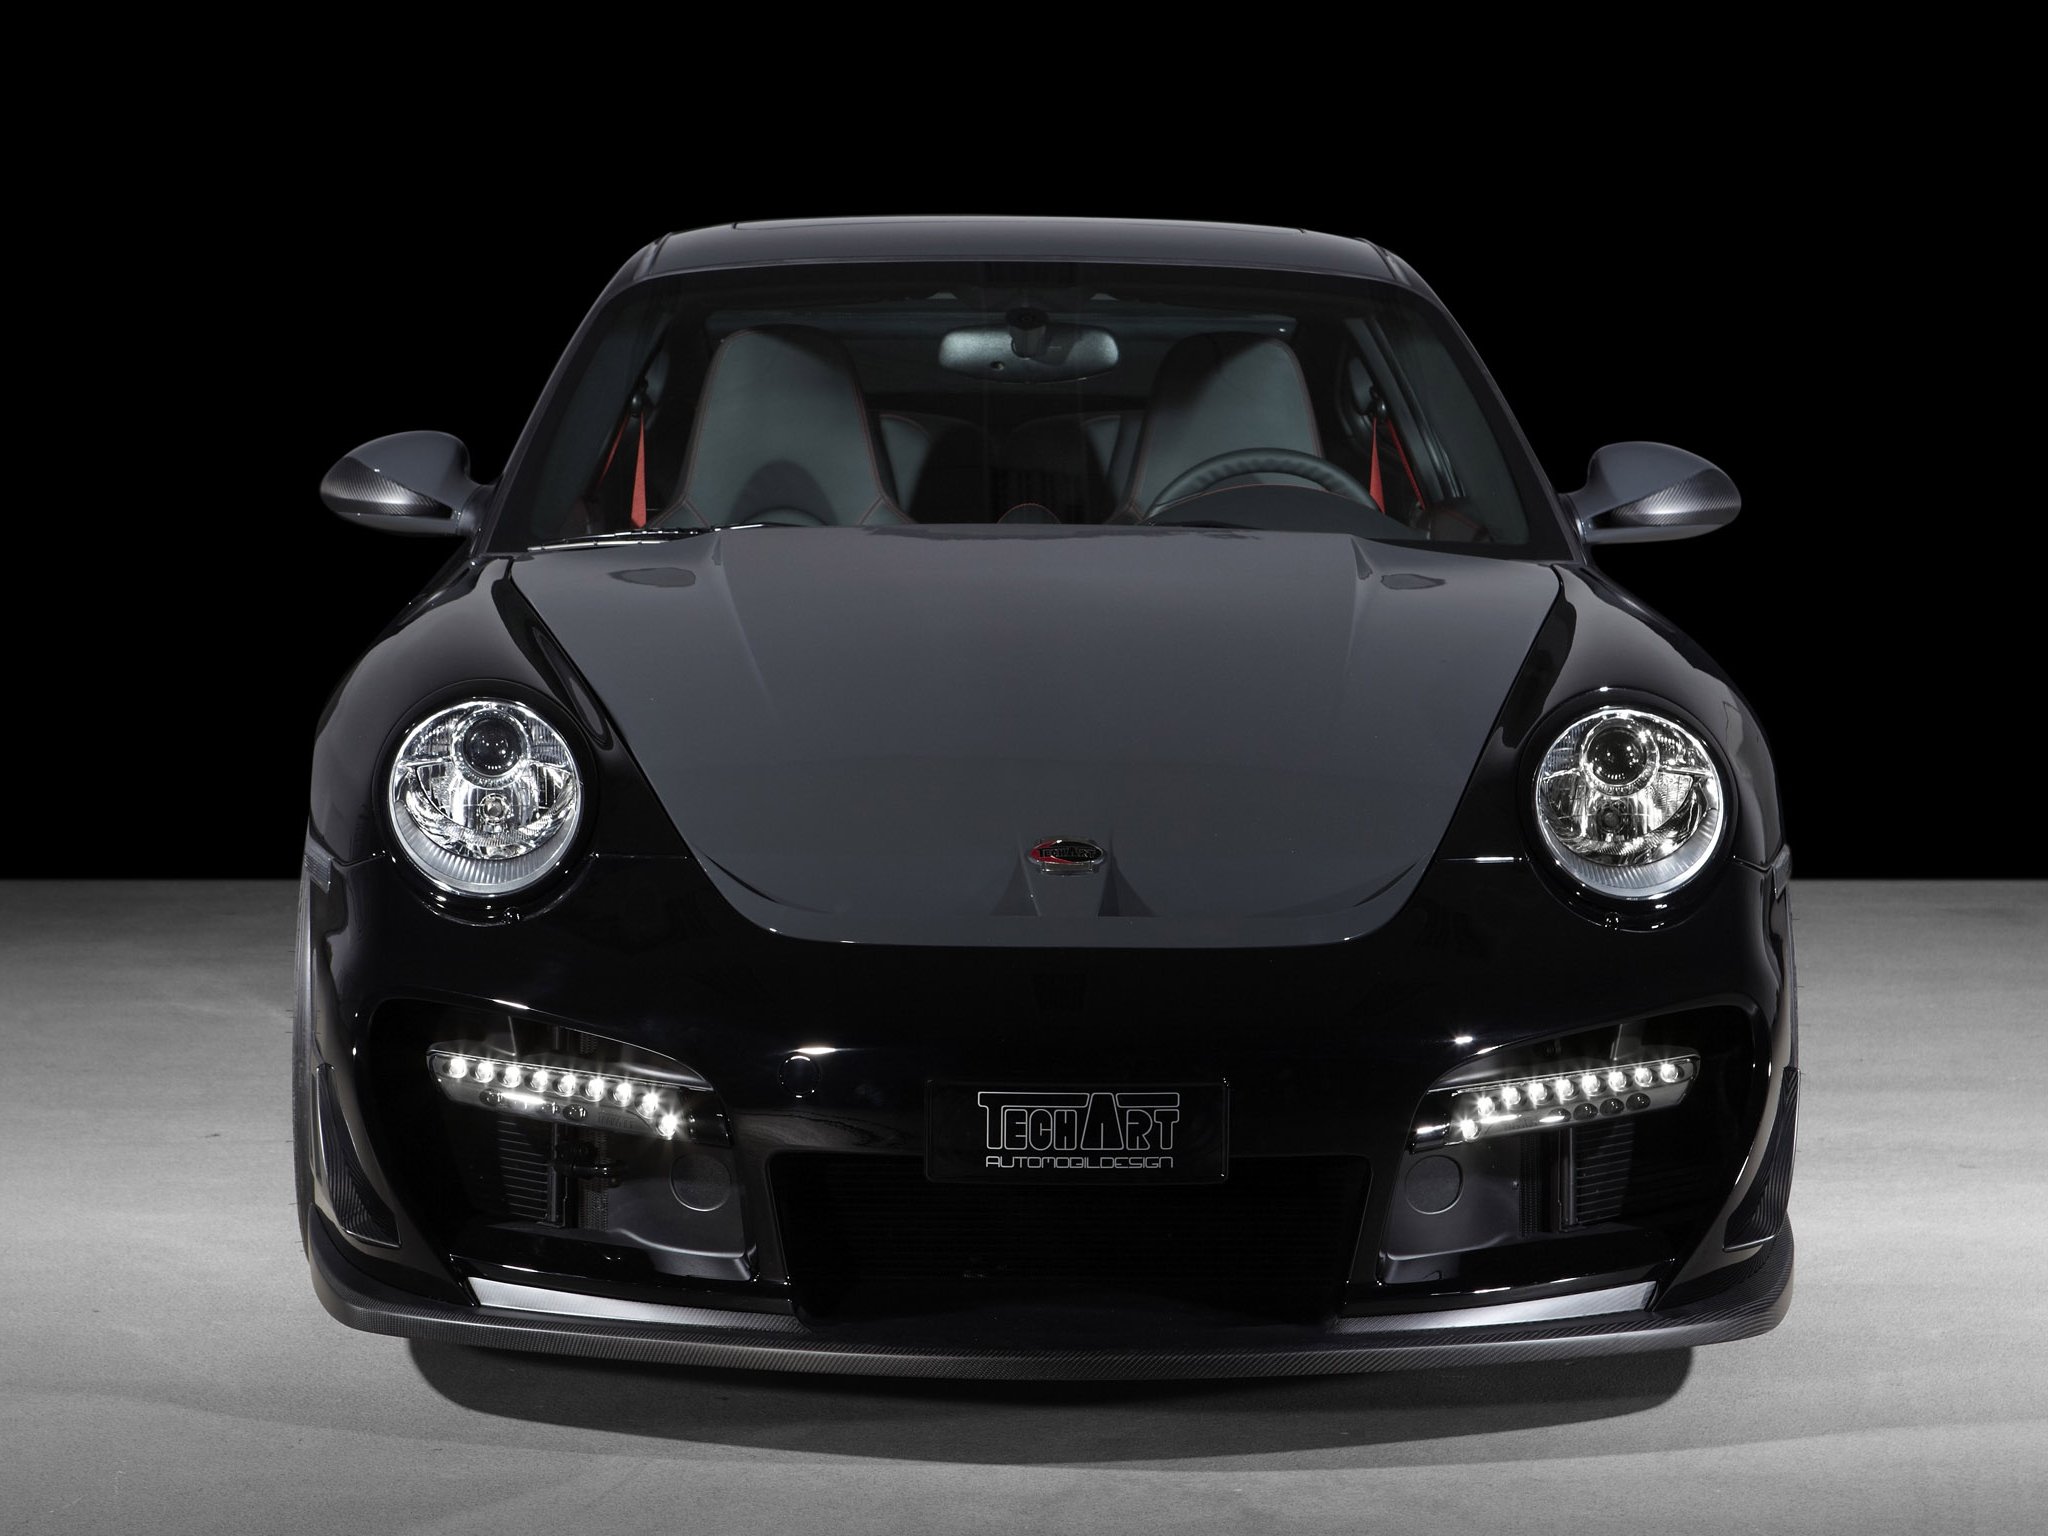 techart, Porsche, 911, Turbo gt, Street r, 997, Cars, Modified, 2010 Wallpaper